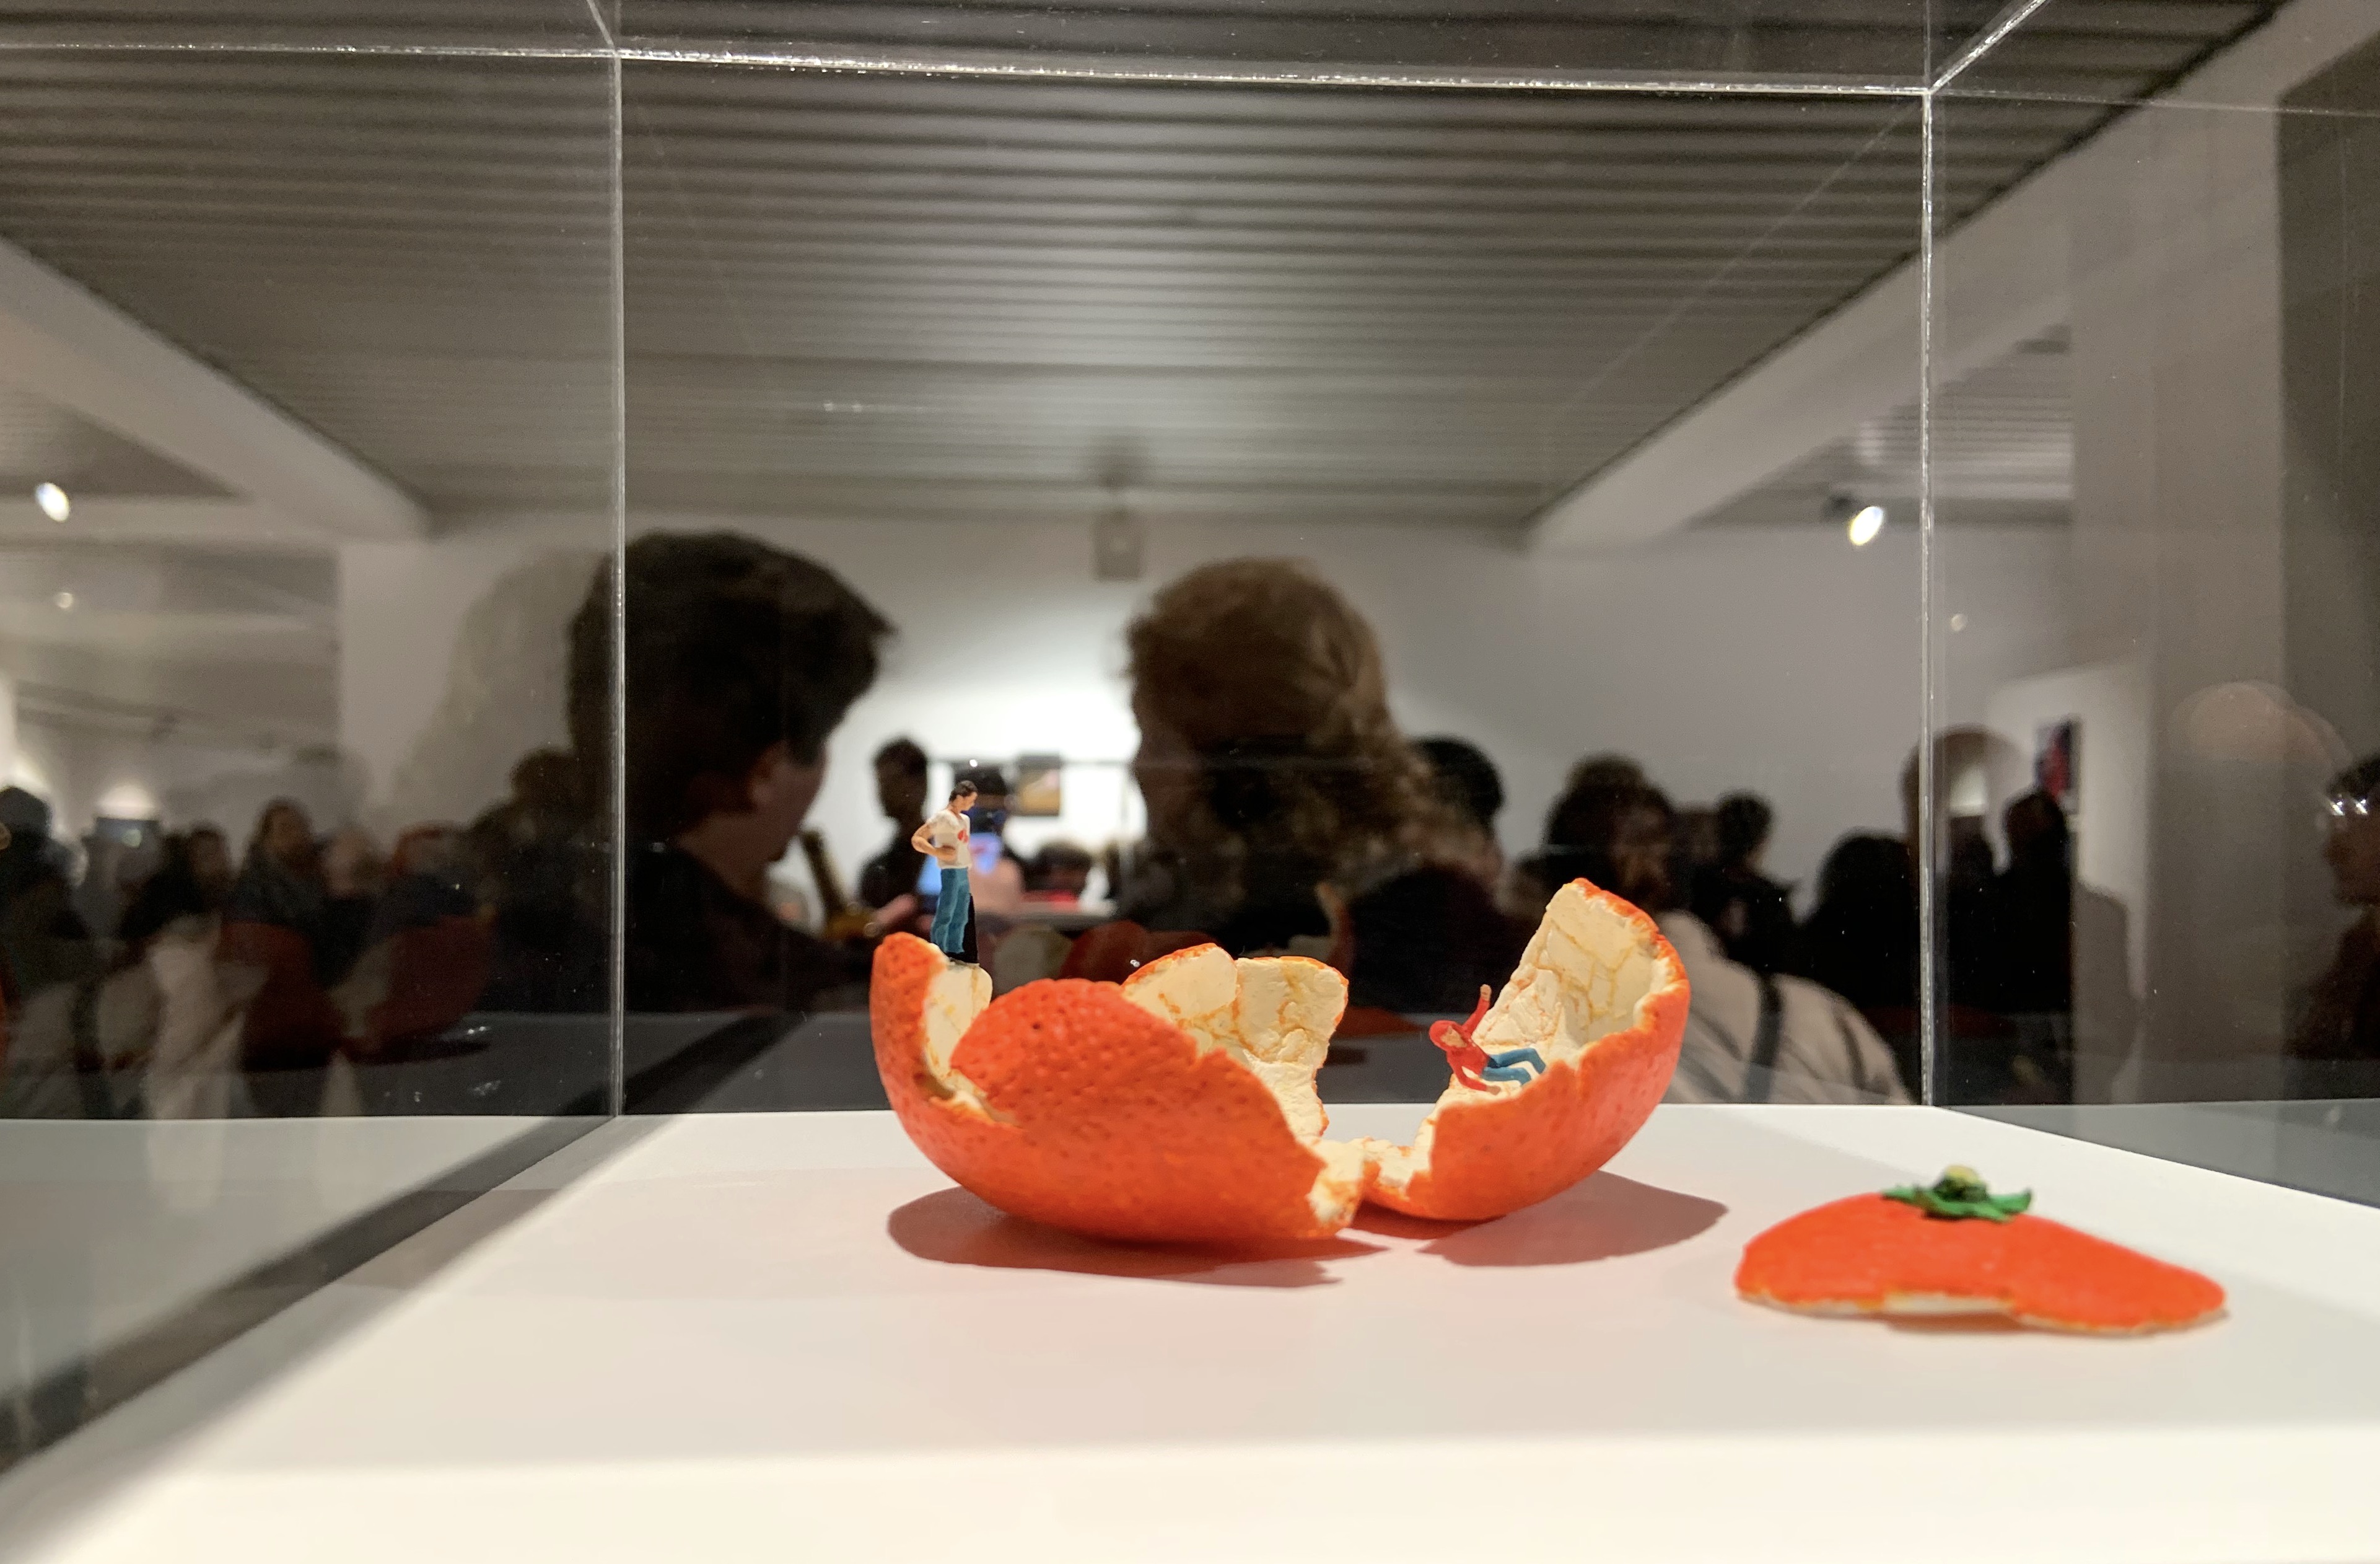 Slinkachu: "Leisure Facilities for Youths", 2020, Affenfaust Galerie, Foto: Martina John